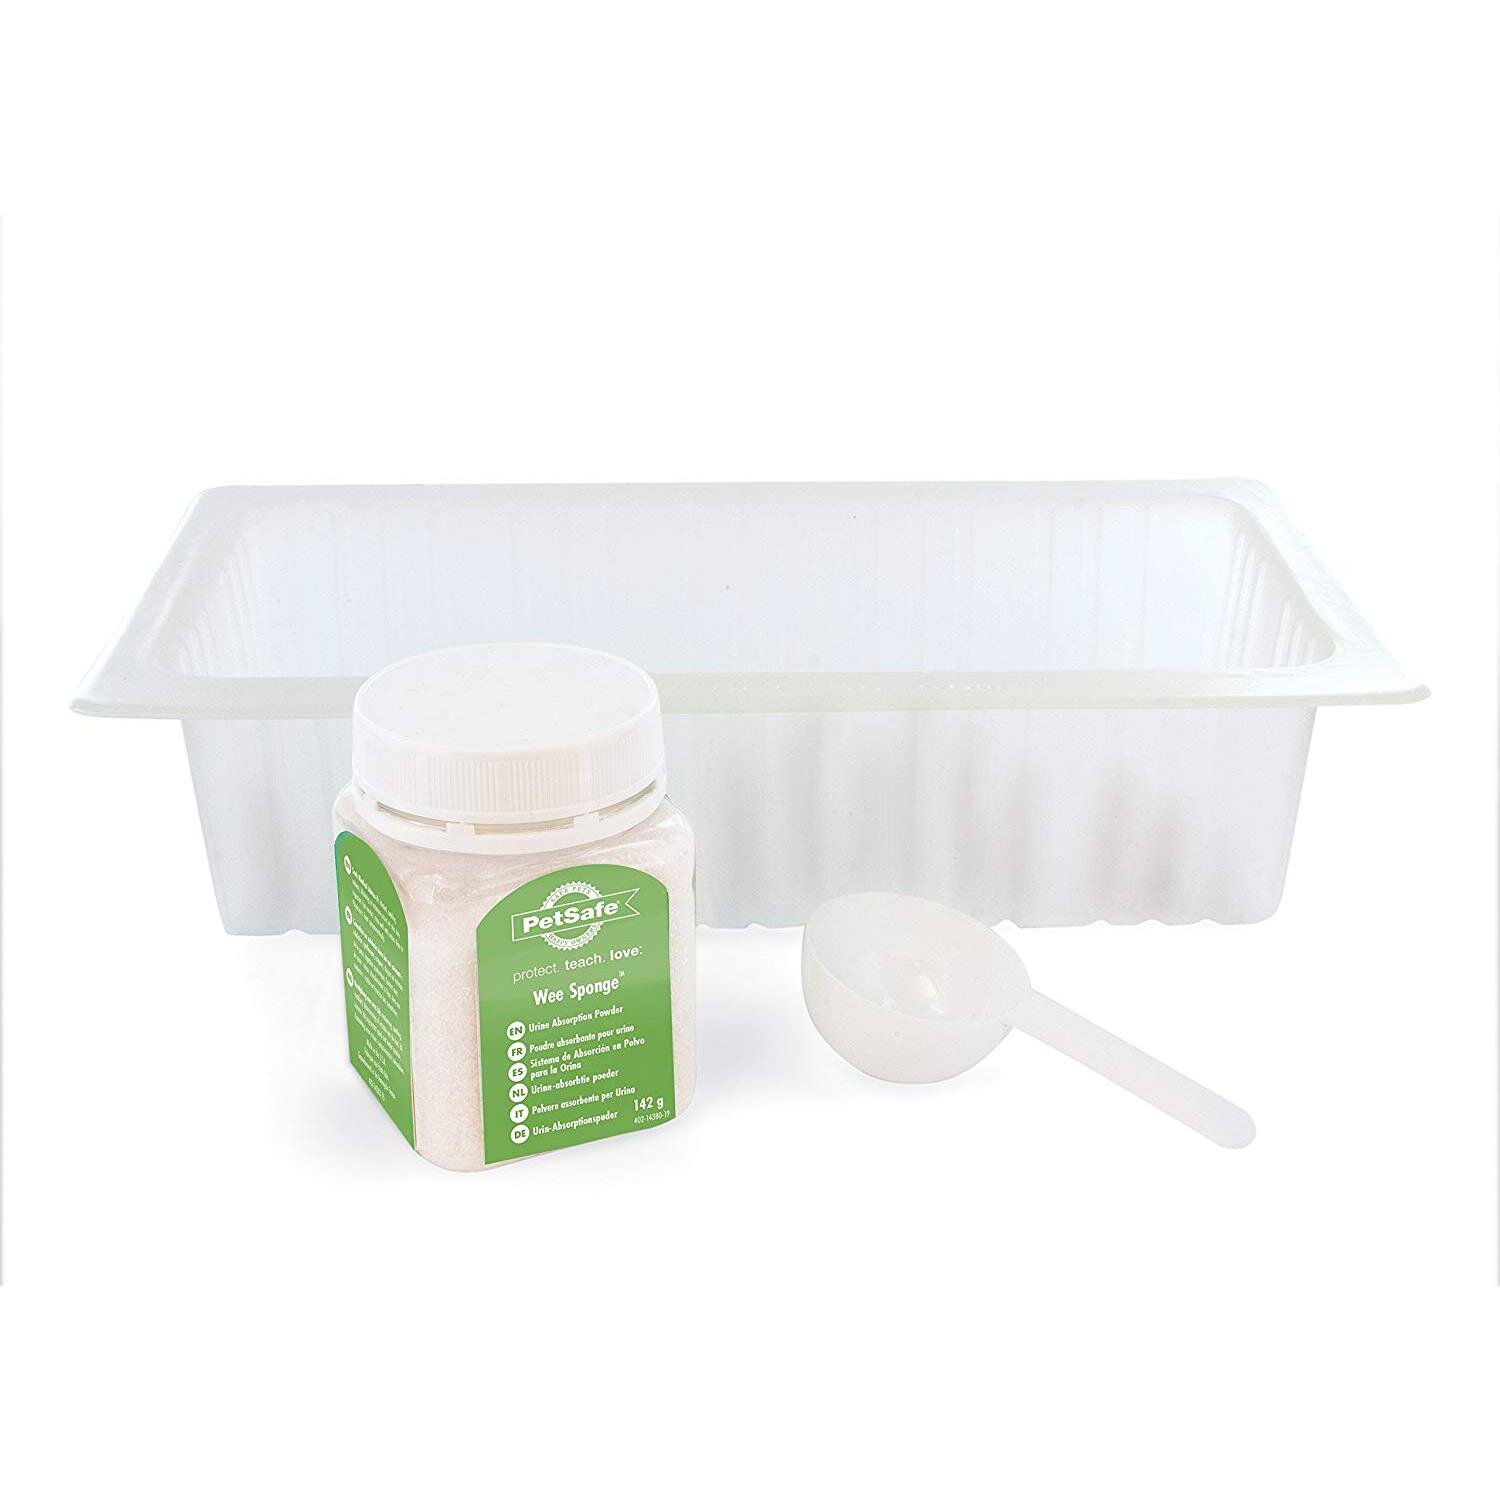 PetSafe Pee-Pod Urine Disposal Kit, 7 x Collection Trays + 142 g Wee Sponge Powder + Absorption Powder, Hygienic, Easy Clean